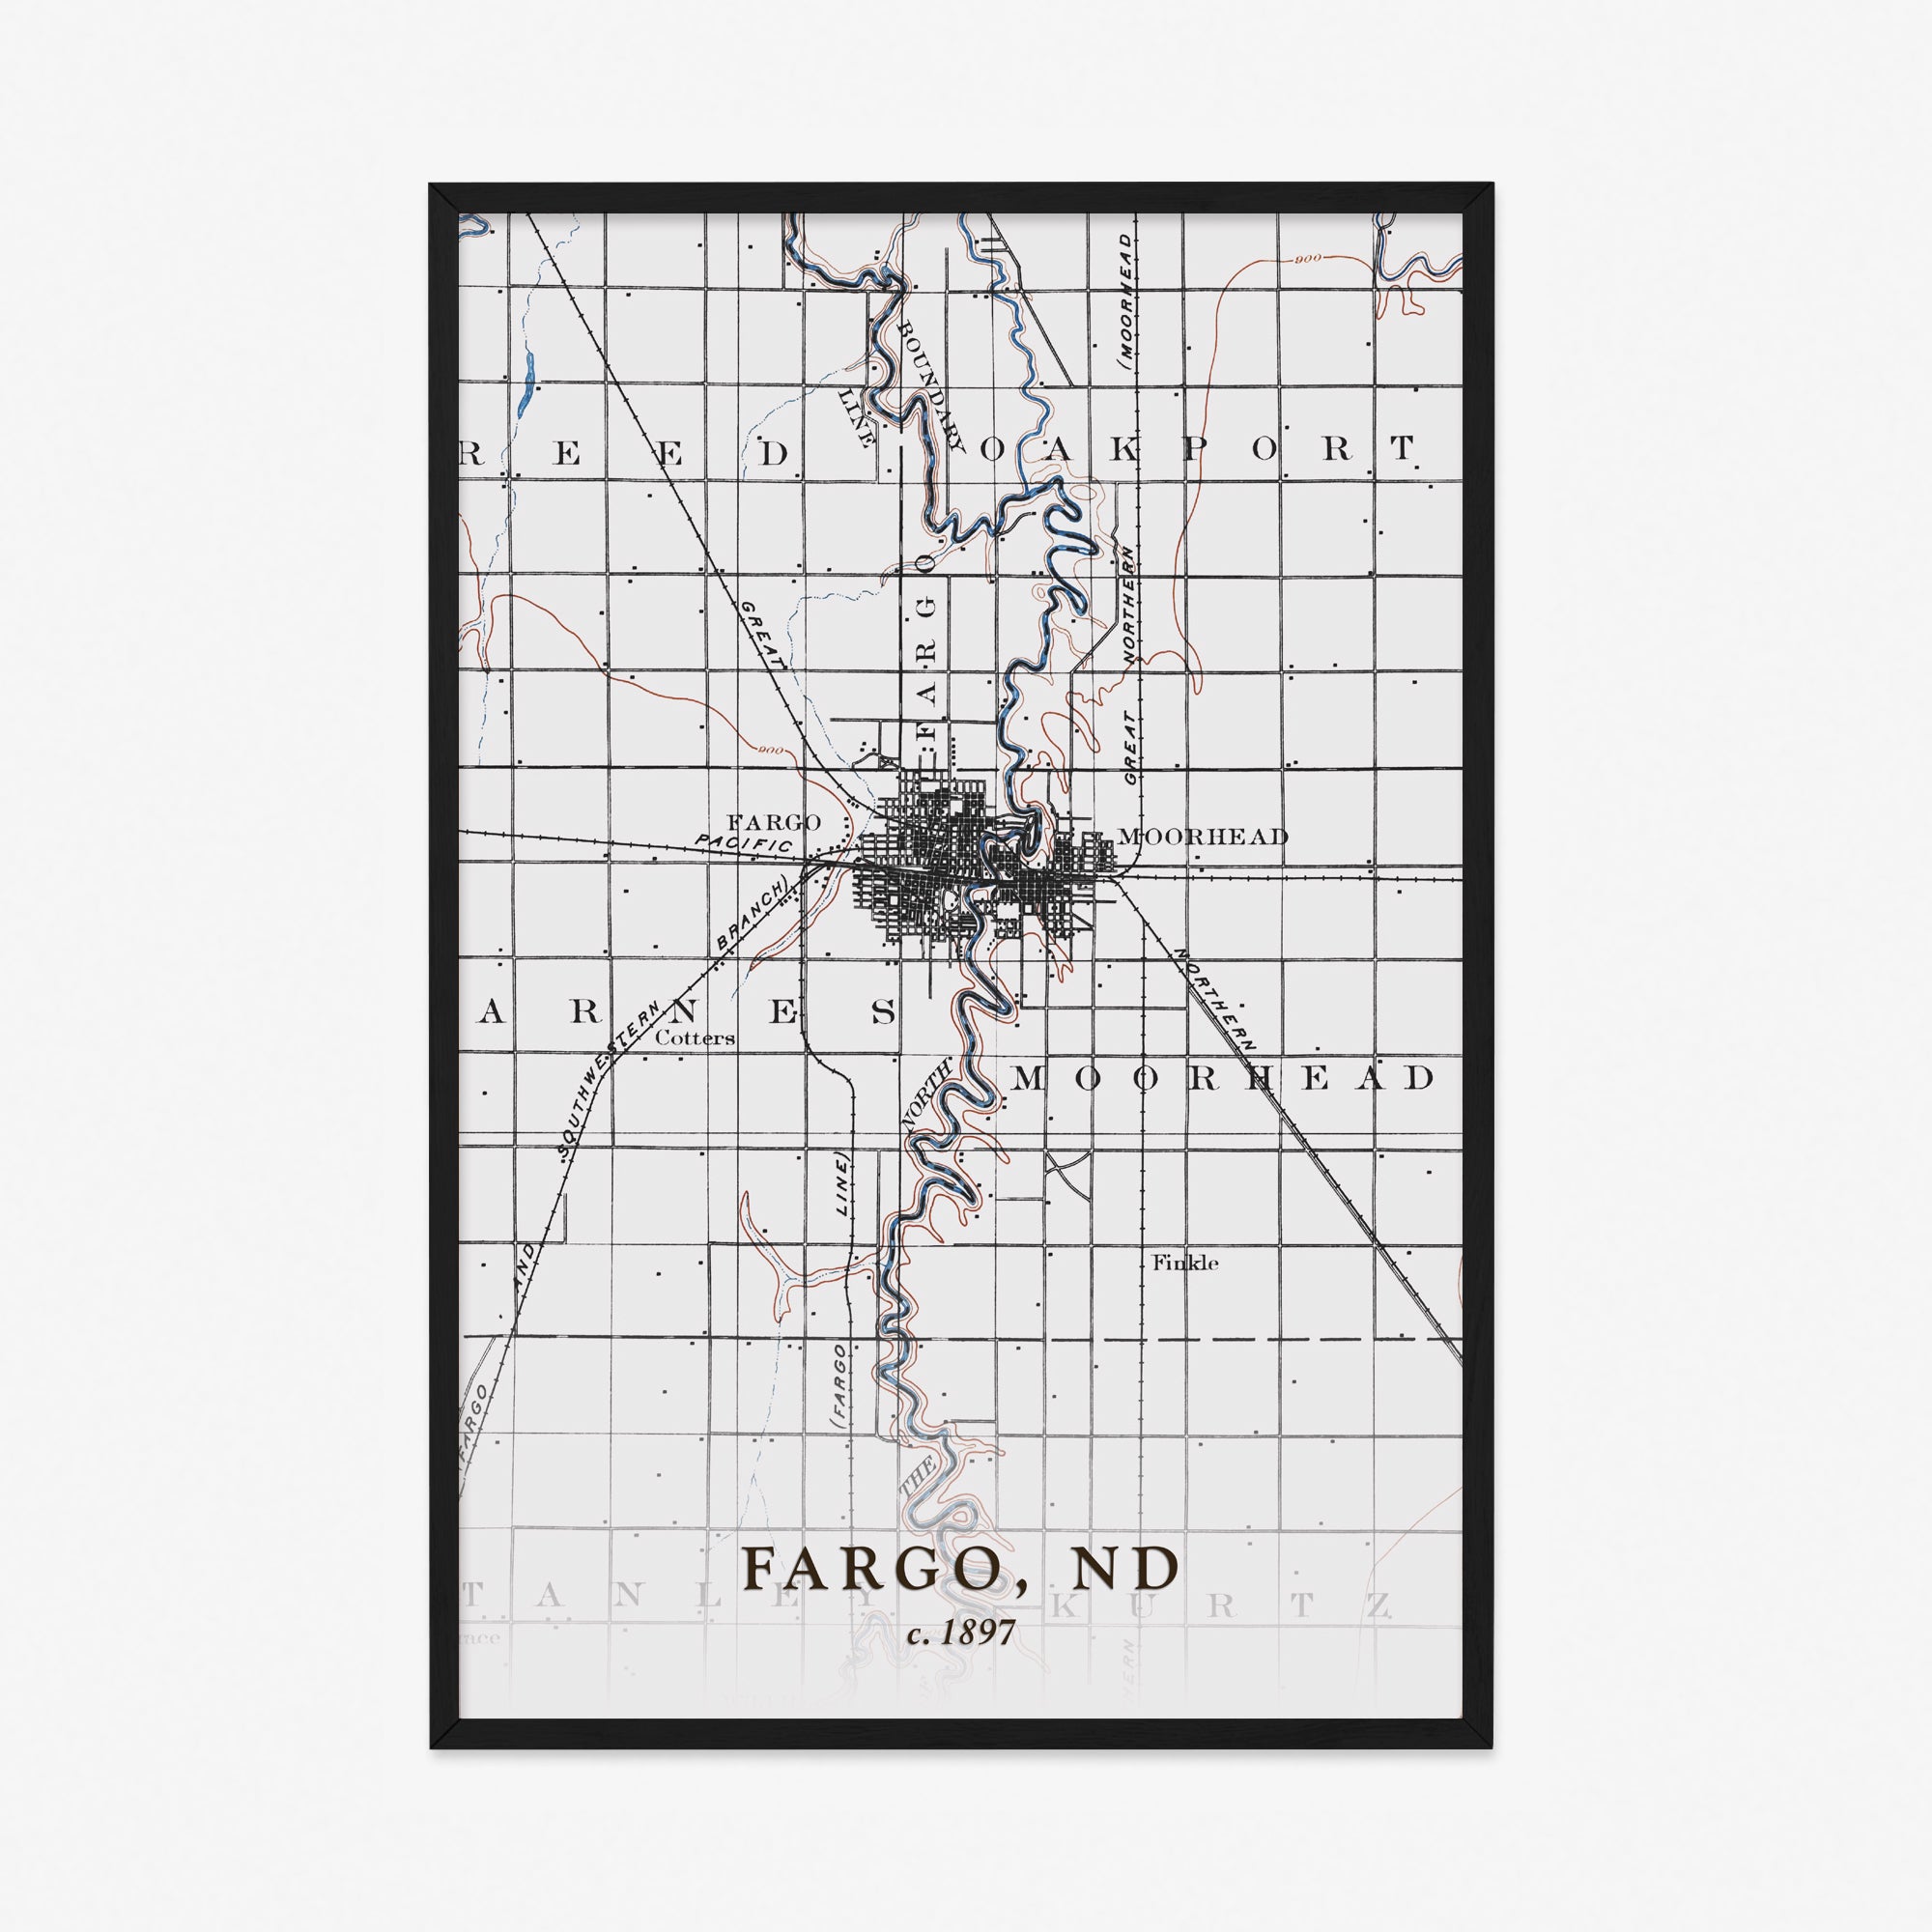 Fargo, ND - 1897 Topographic Map